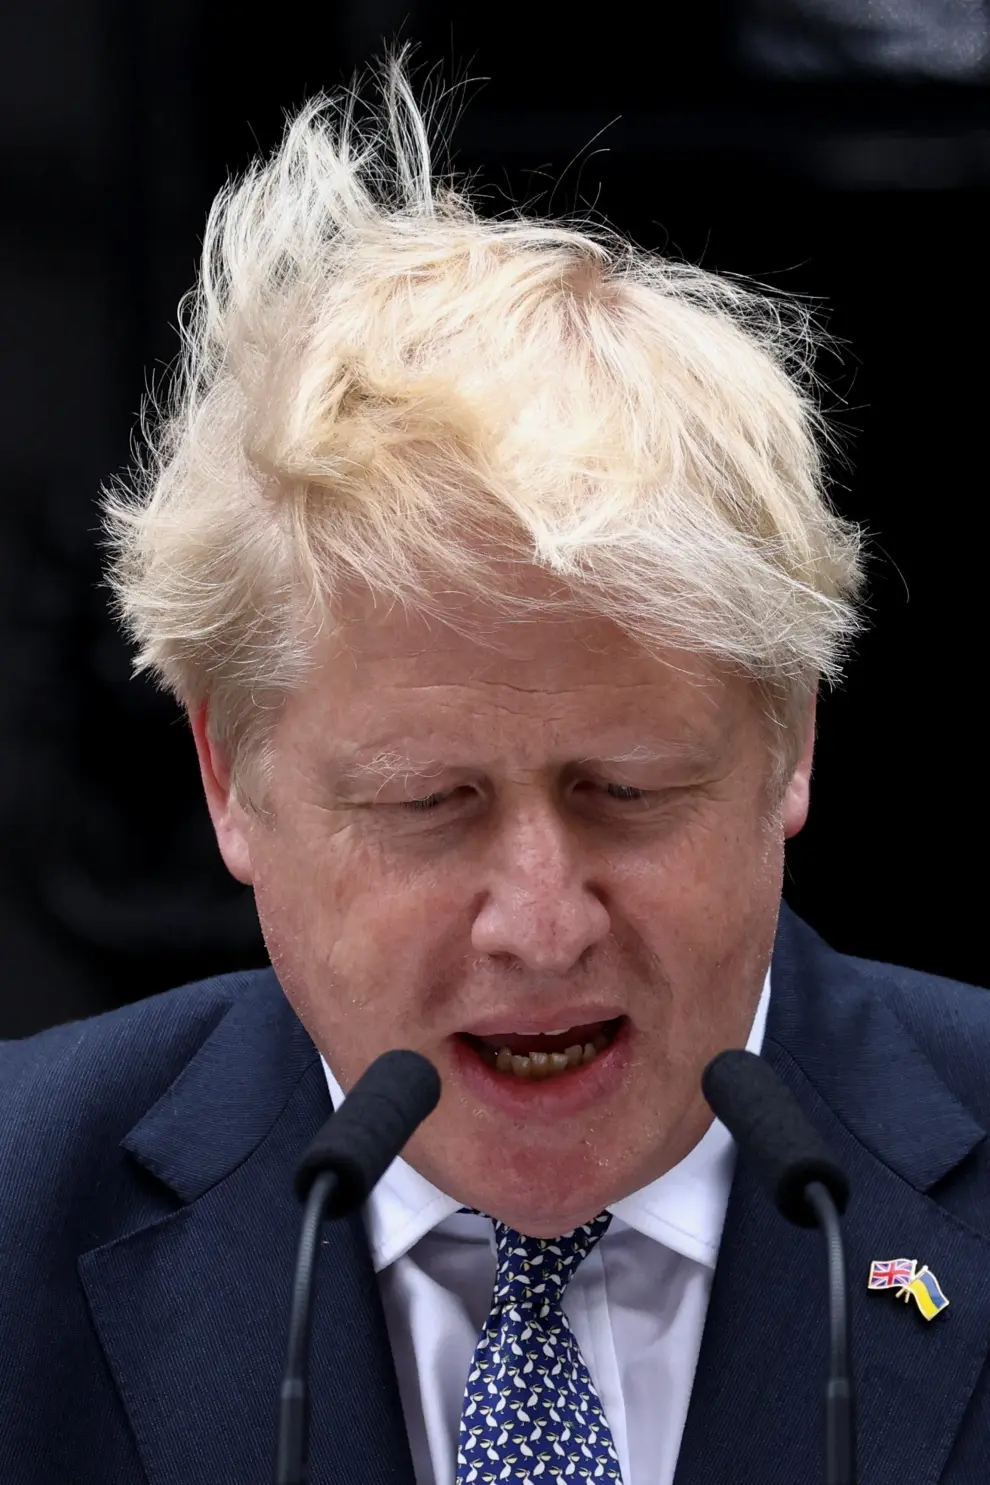 People listen as British Prime Minister Boris Johnson makes a statement at Downing Street in London, Britain, July 7, 2022. REUTERS/Maja Smiejkowska BRITAIN-POLITICS/